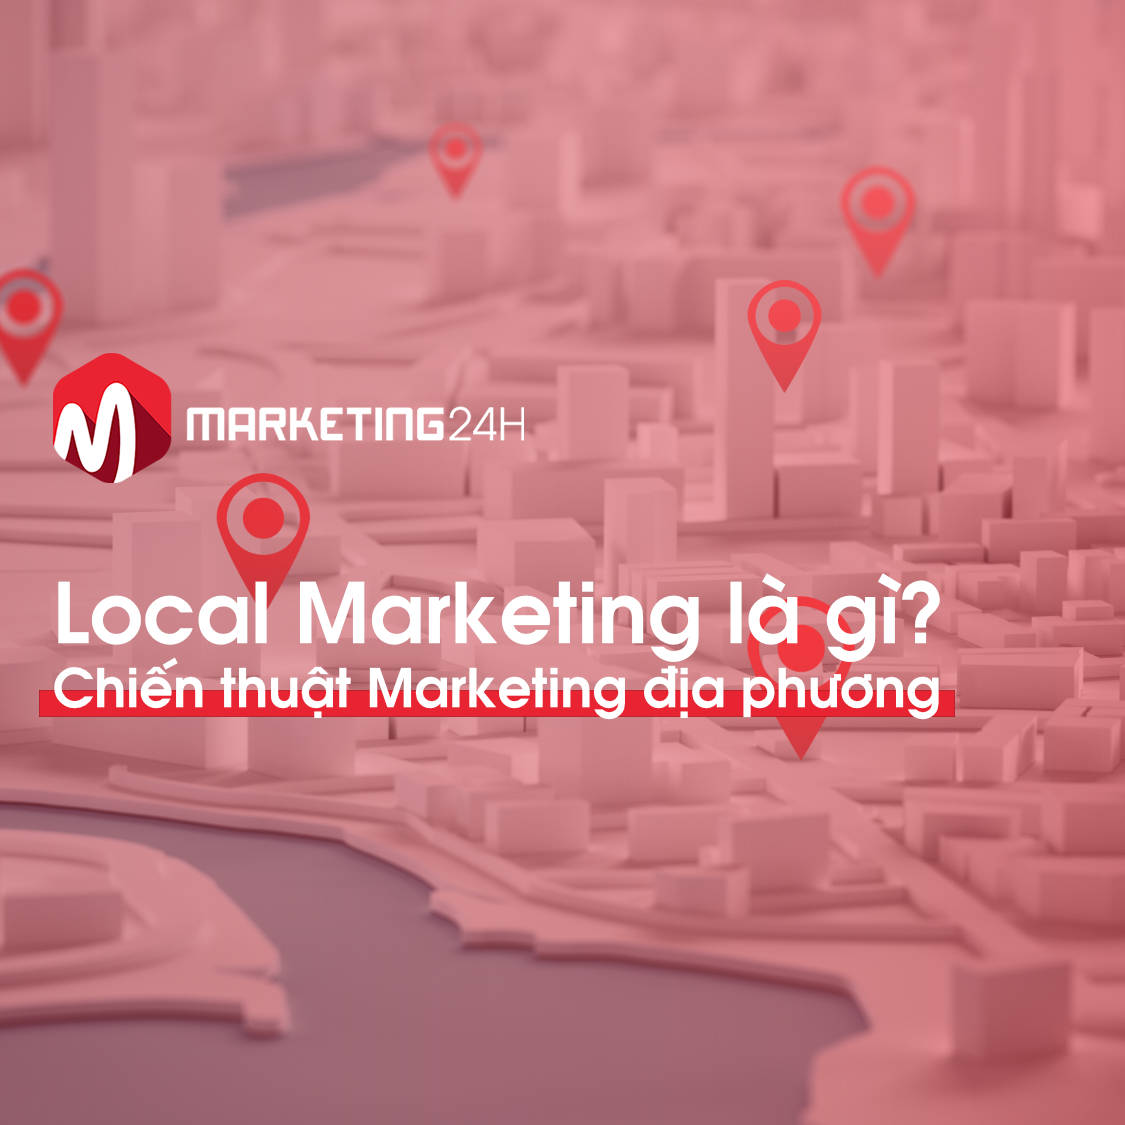 Local-Marketing-la-gi-Marketing24h.vn